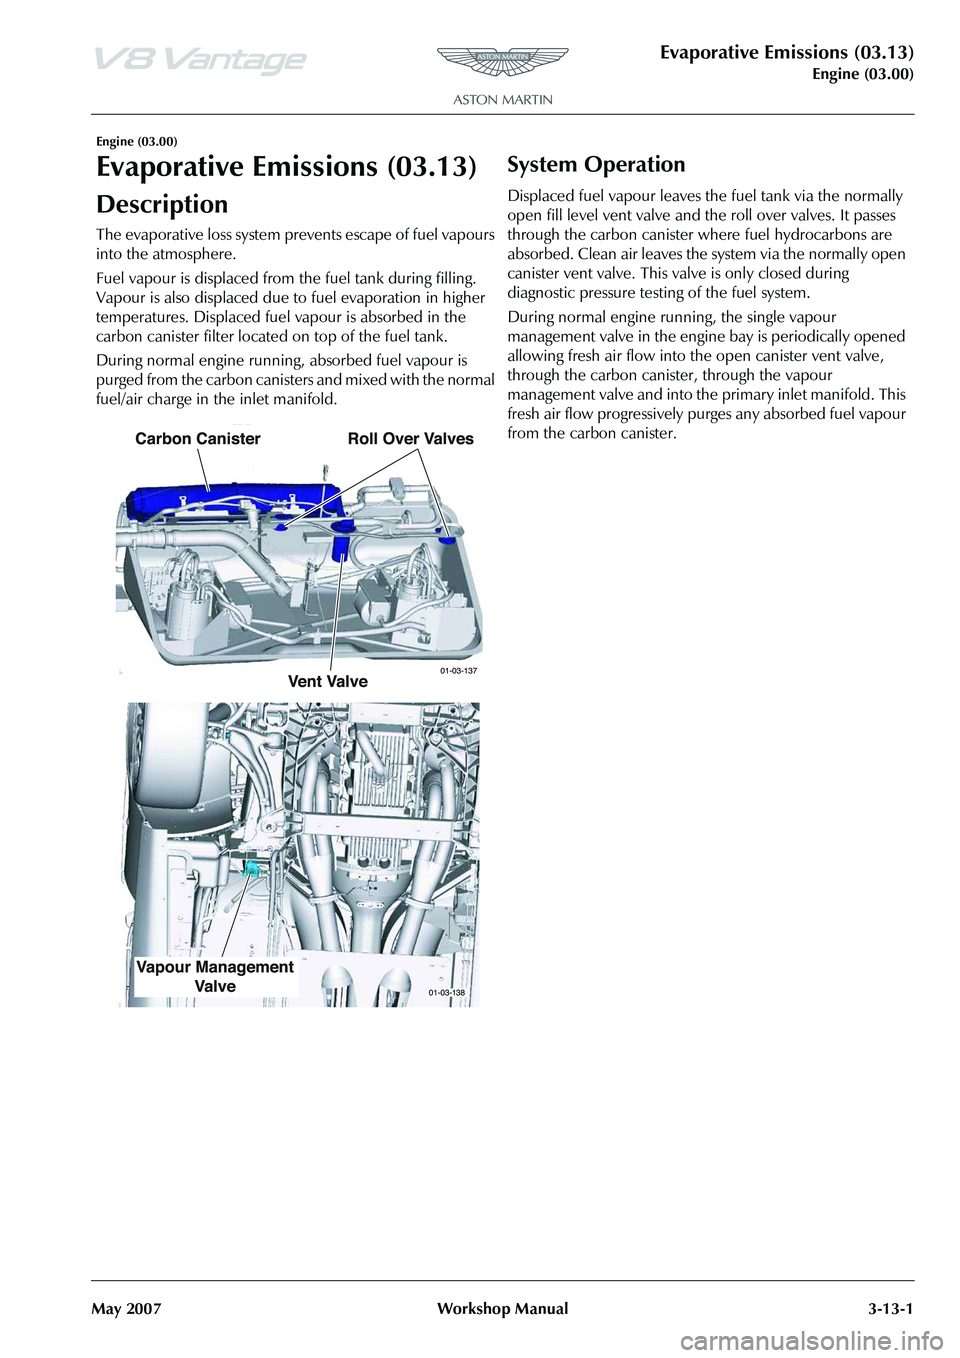 ASTON MARTIN V8 VANTAGE 2010  Workshop Manual Evaporative Emissions (03.13)
Engine (03.00)
May 2007 Workshop Manual 3-13-1
Engine (03.00)
Evaporative Emissions (03.13)
Description
The evaporative loss system prevents escape of fuel vapours 
into 